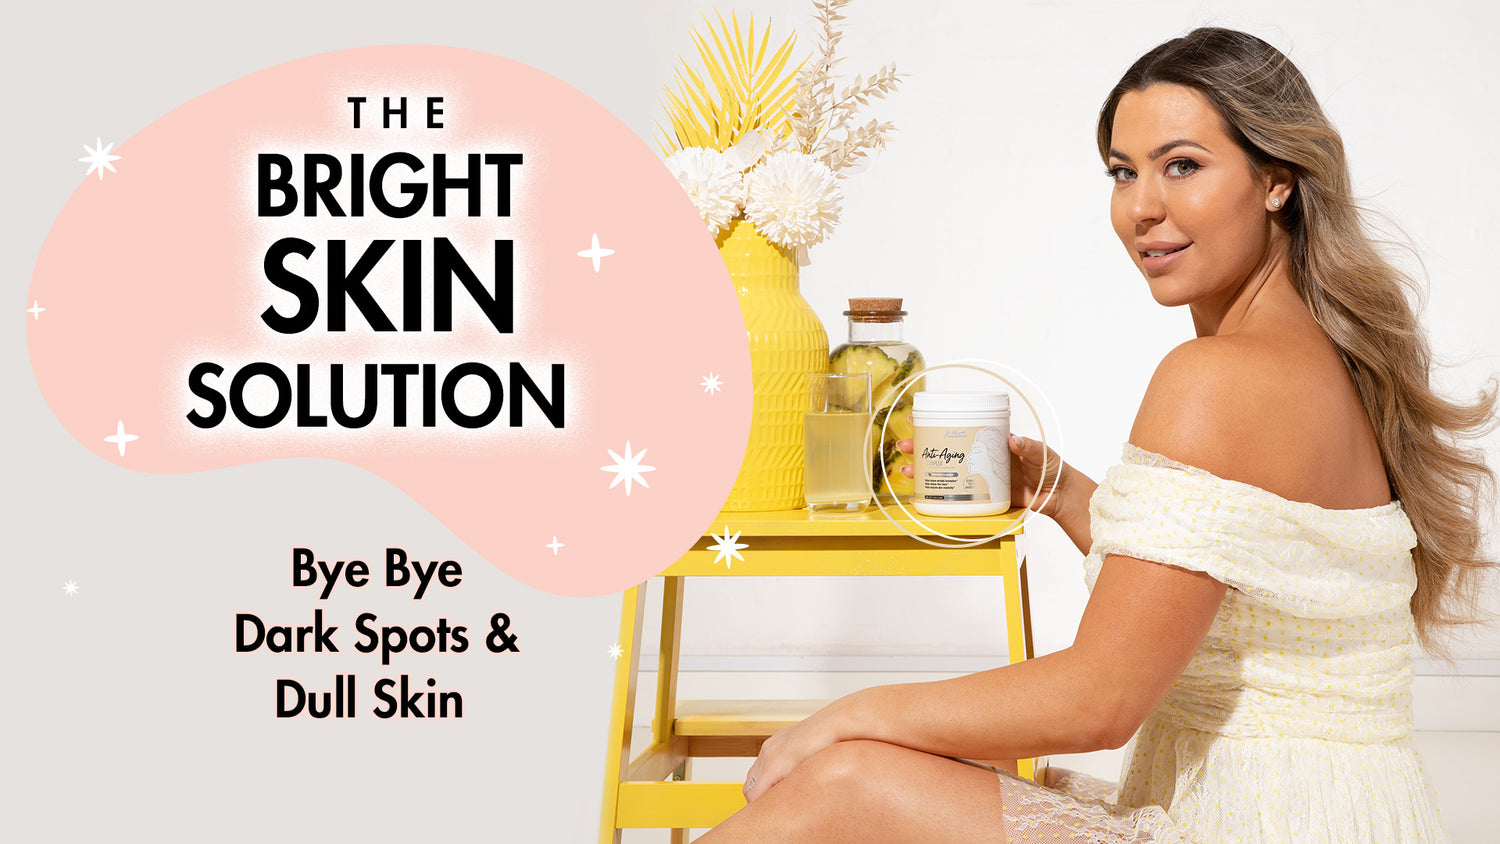 The Bright Skin Solution! Bye Bye Dark Spots & Dull Skin